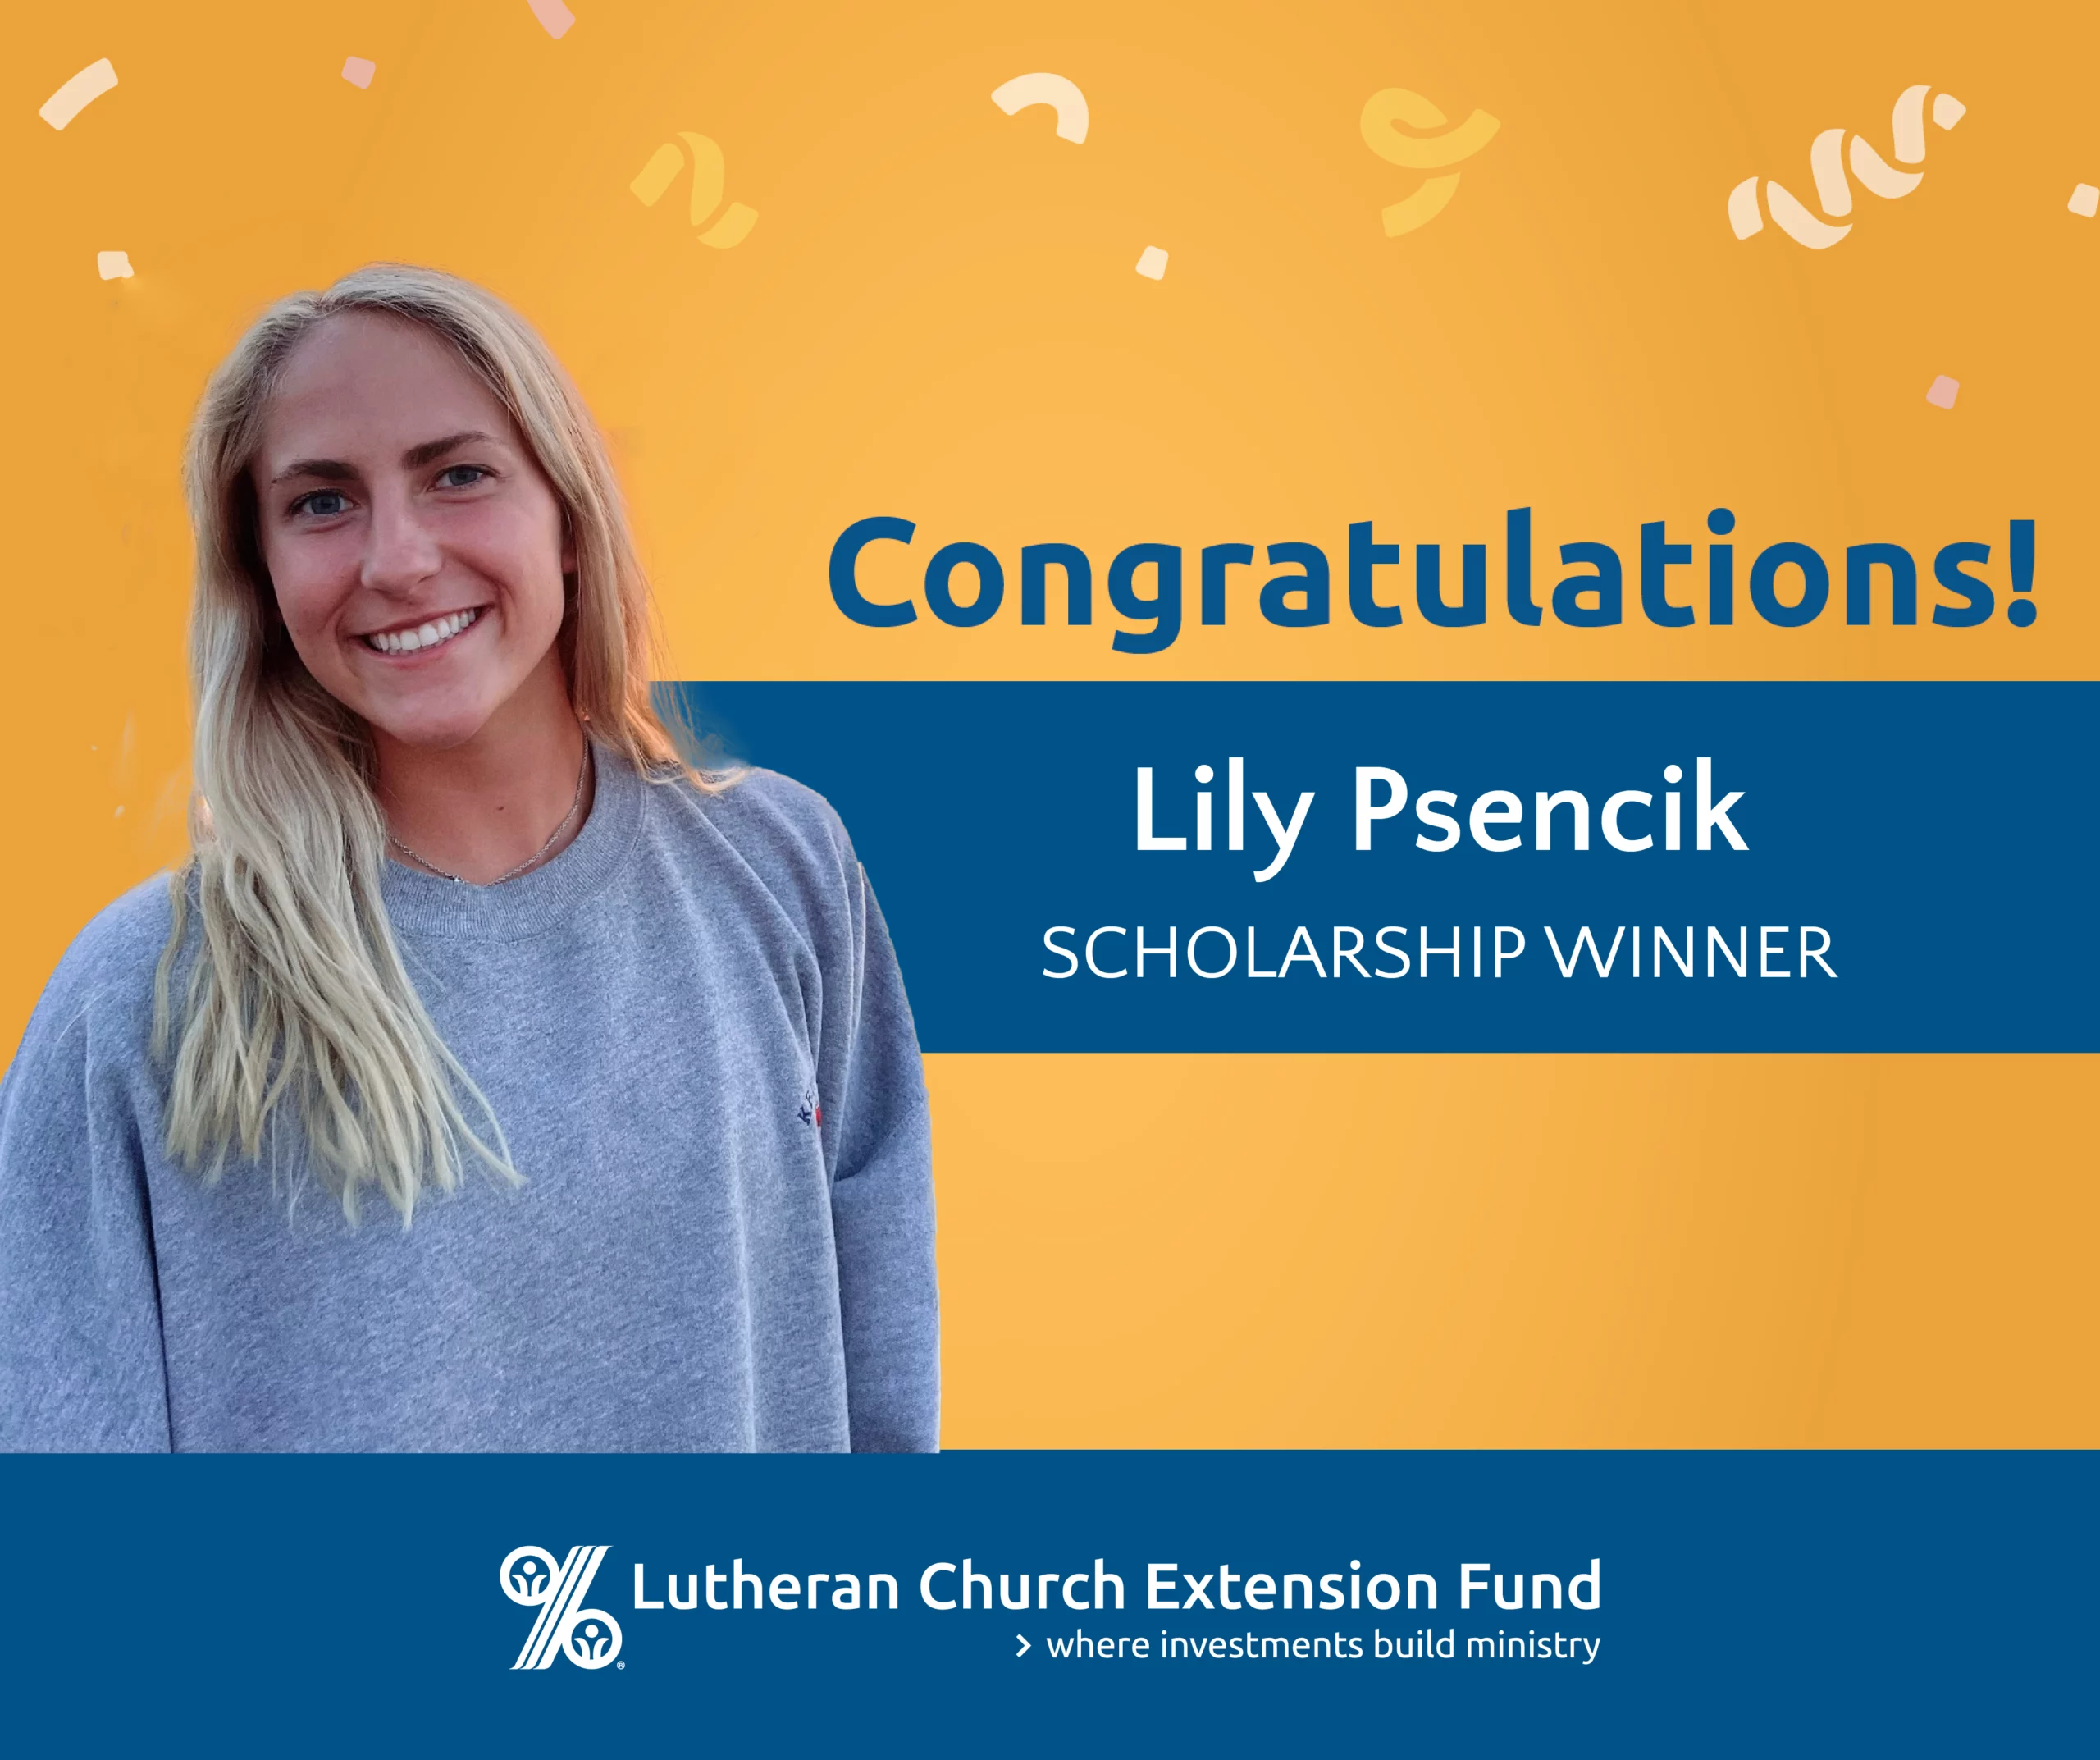 Lily Psencik, scholarship winner